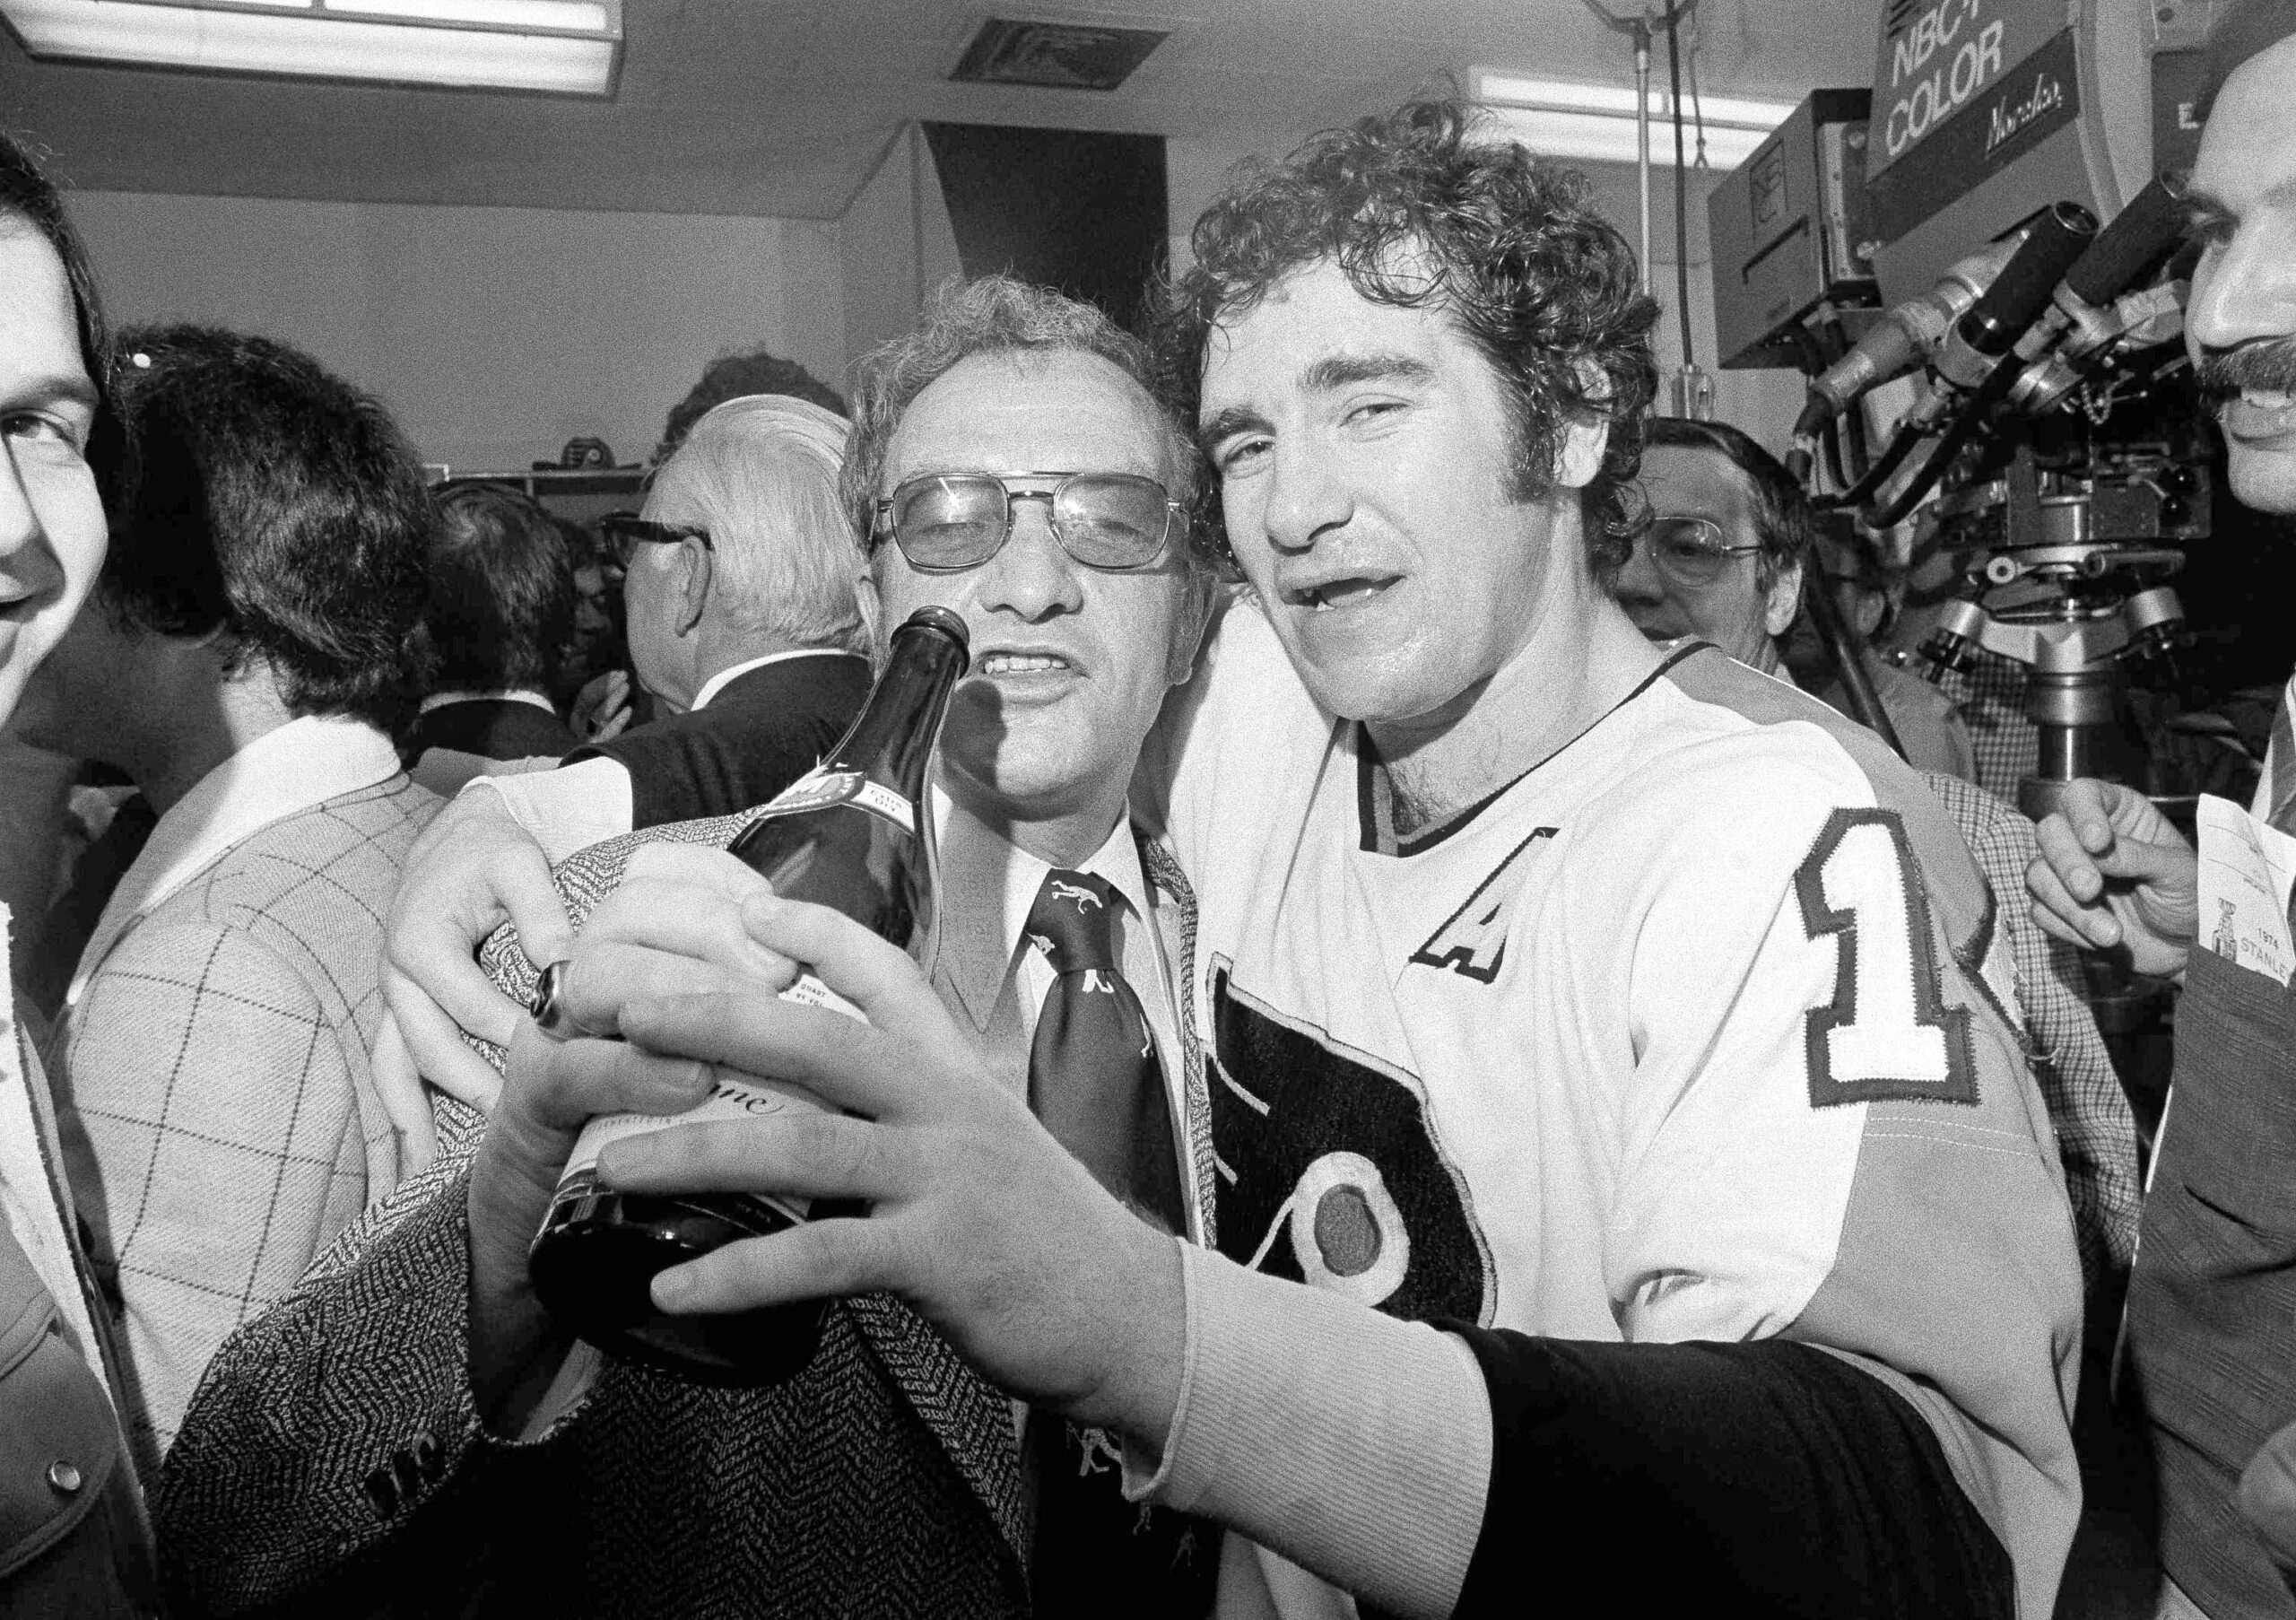 Joe Watson, Fred Shero, 1974, Philadelphia Flyers